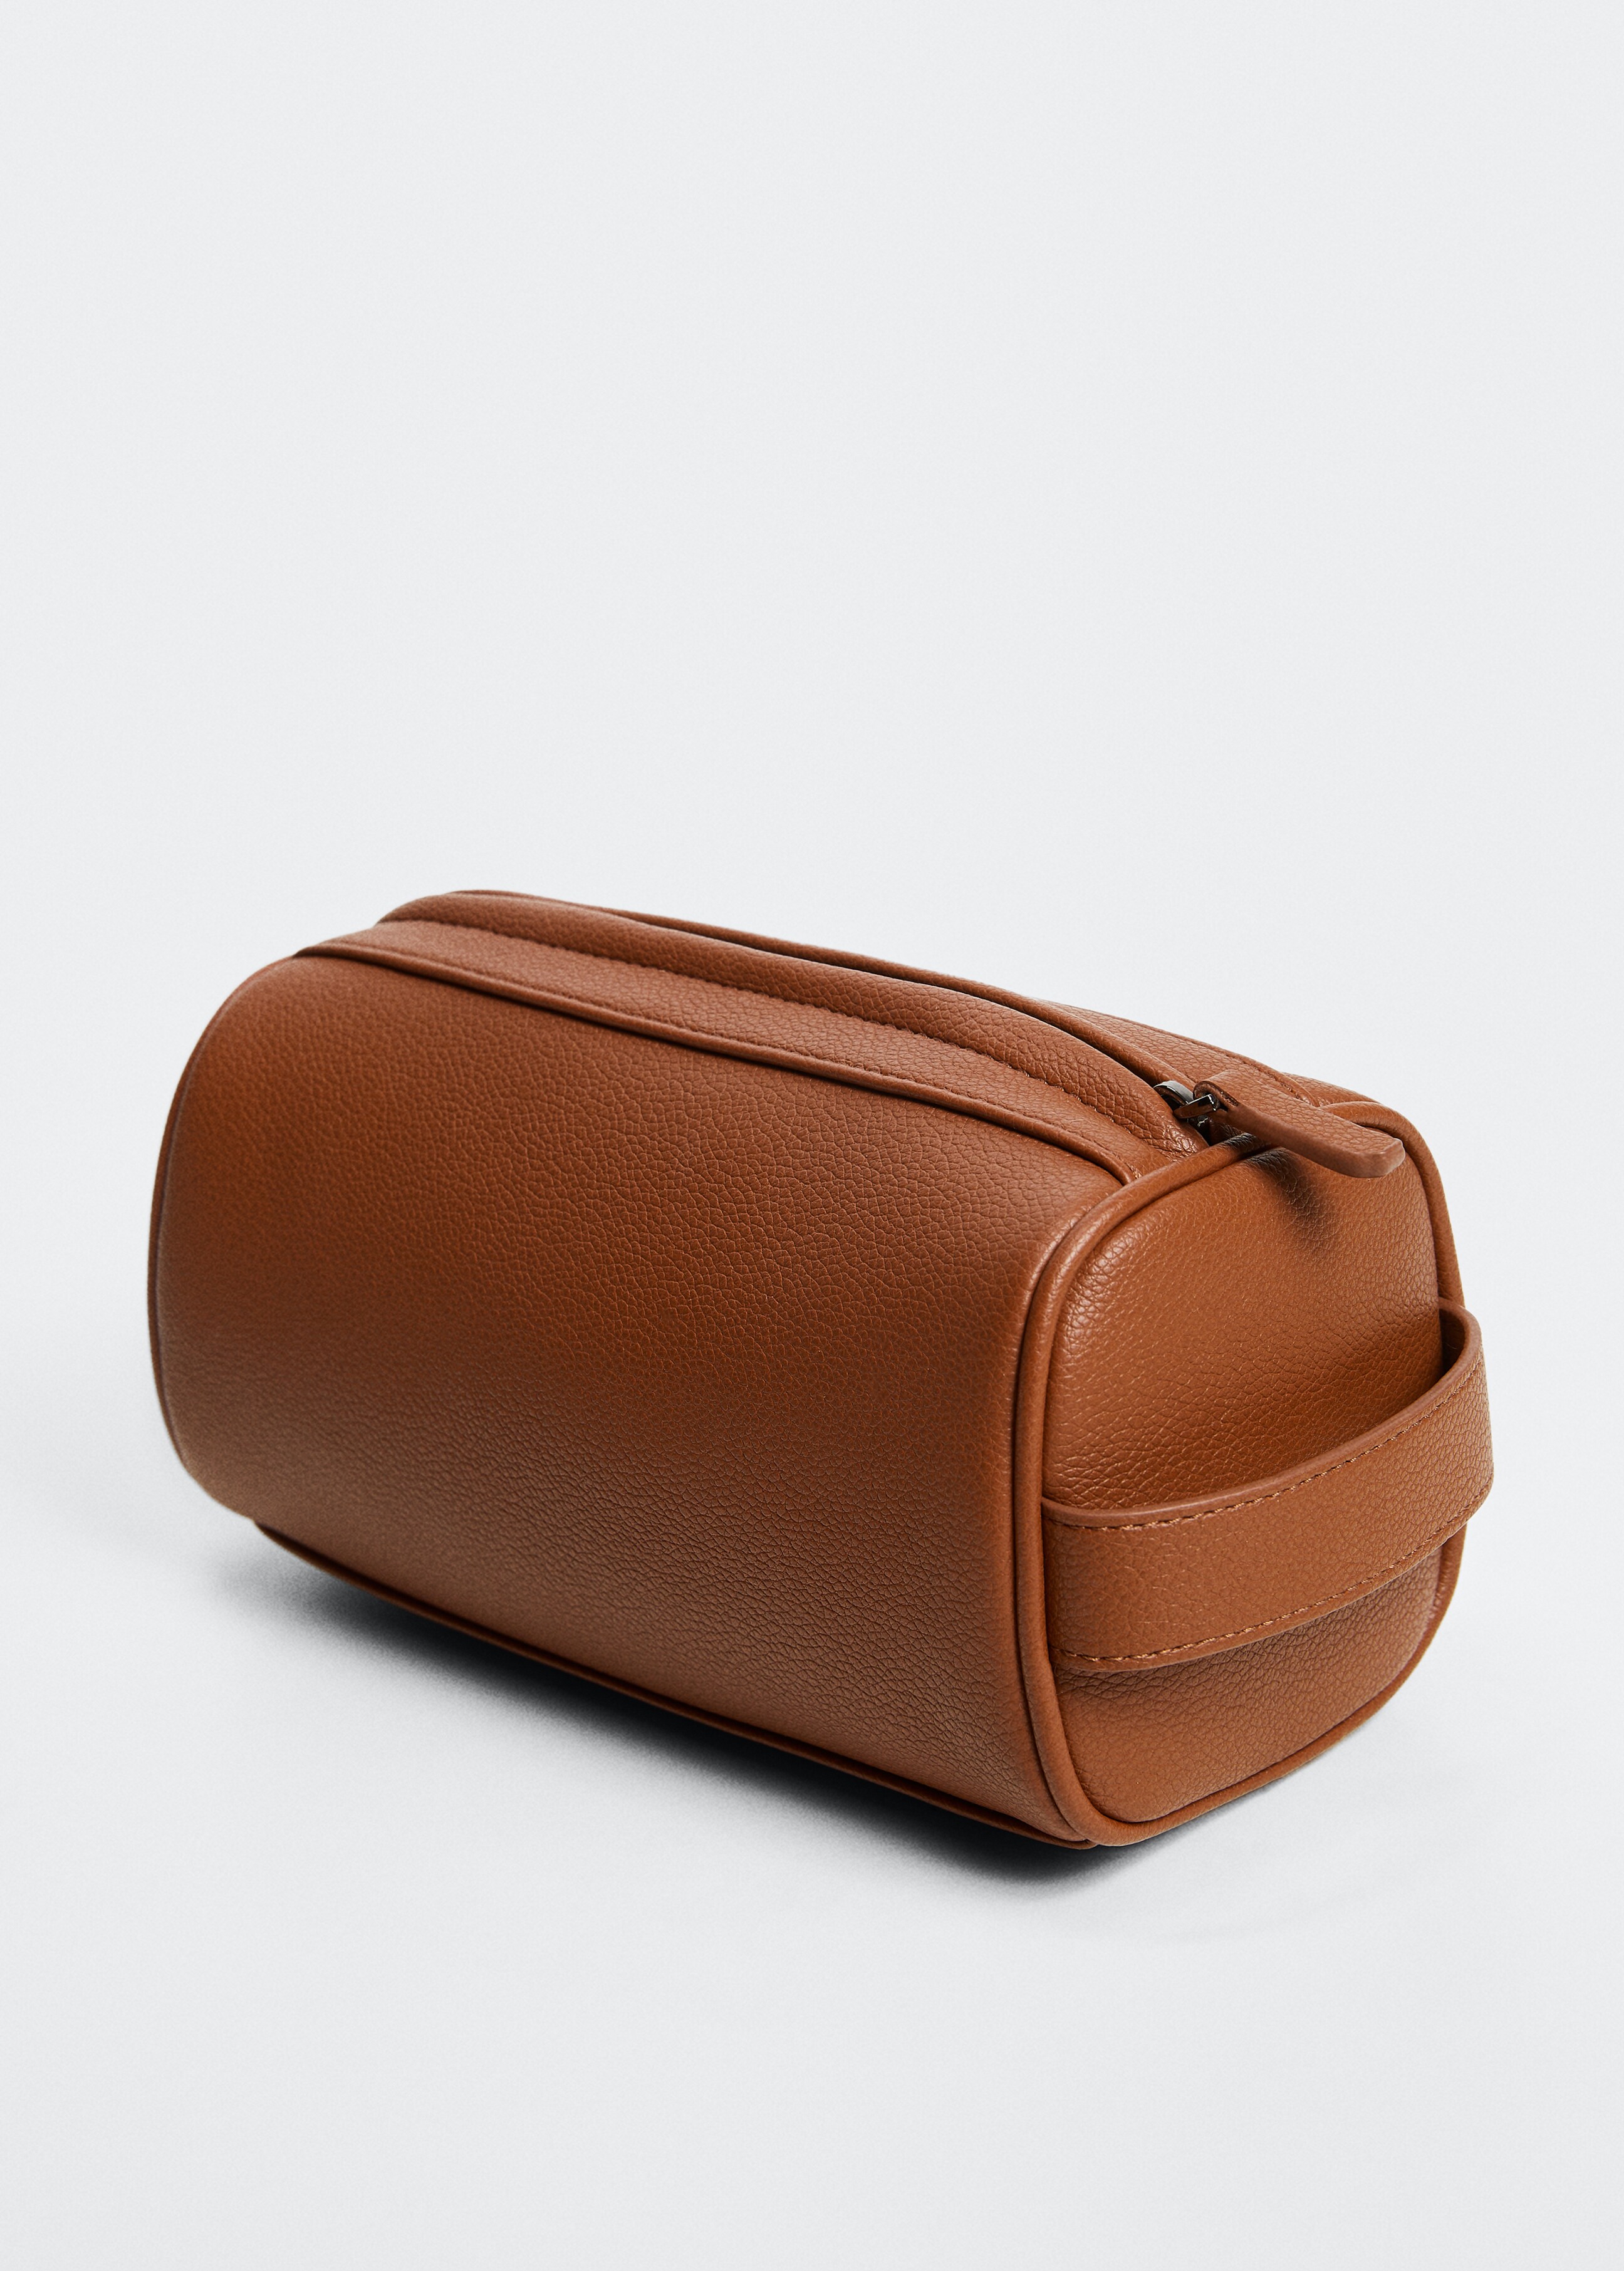 Leather-effect toiletry bag - Medium plane